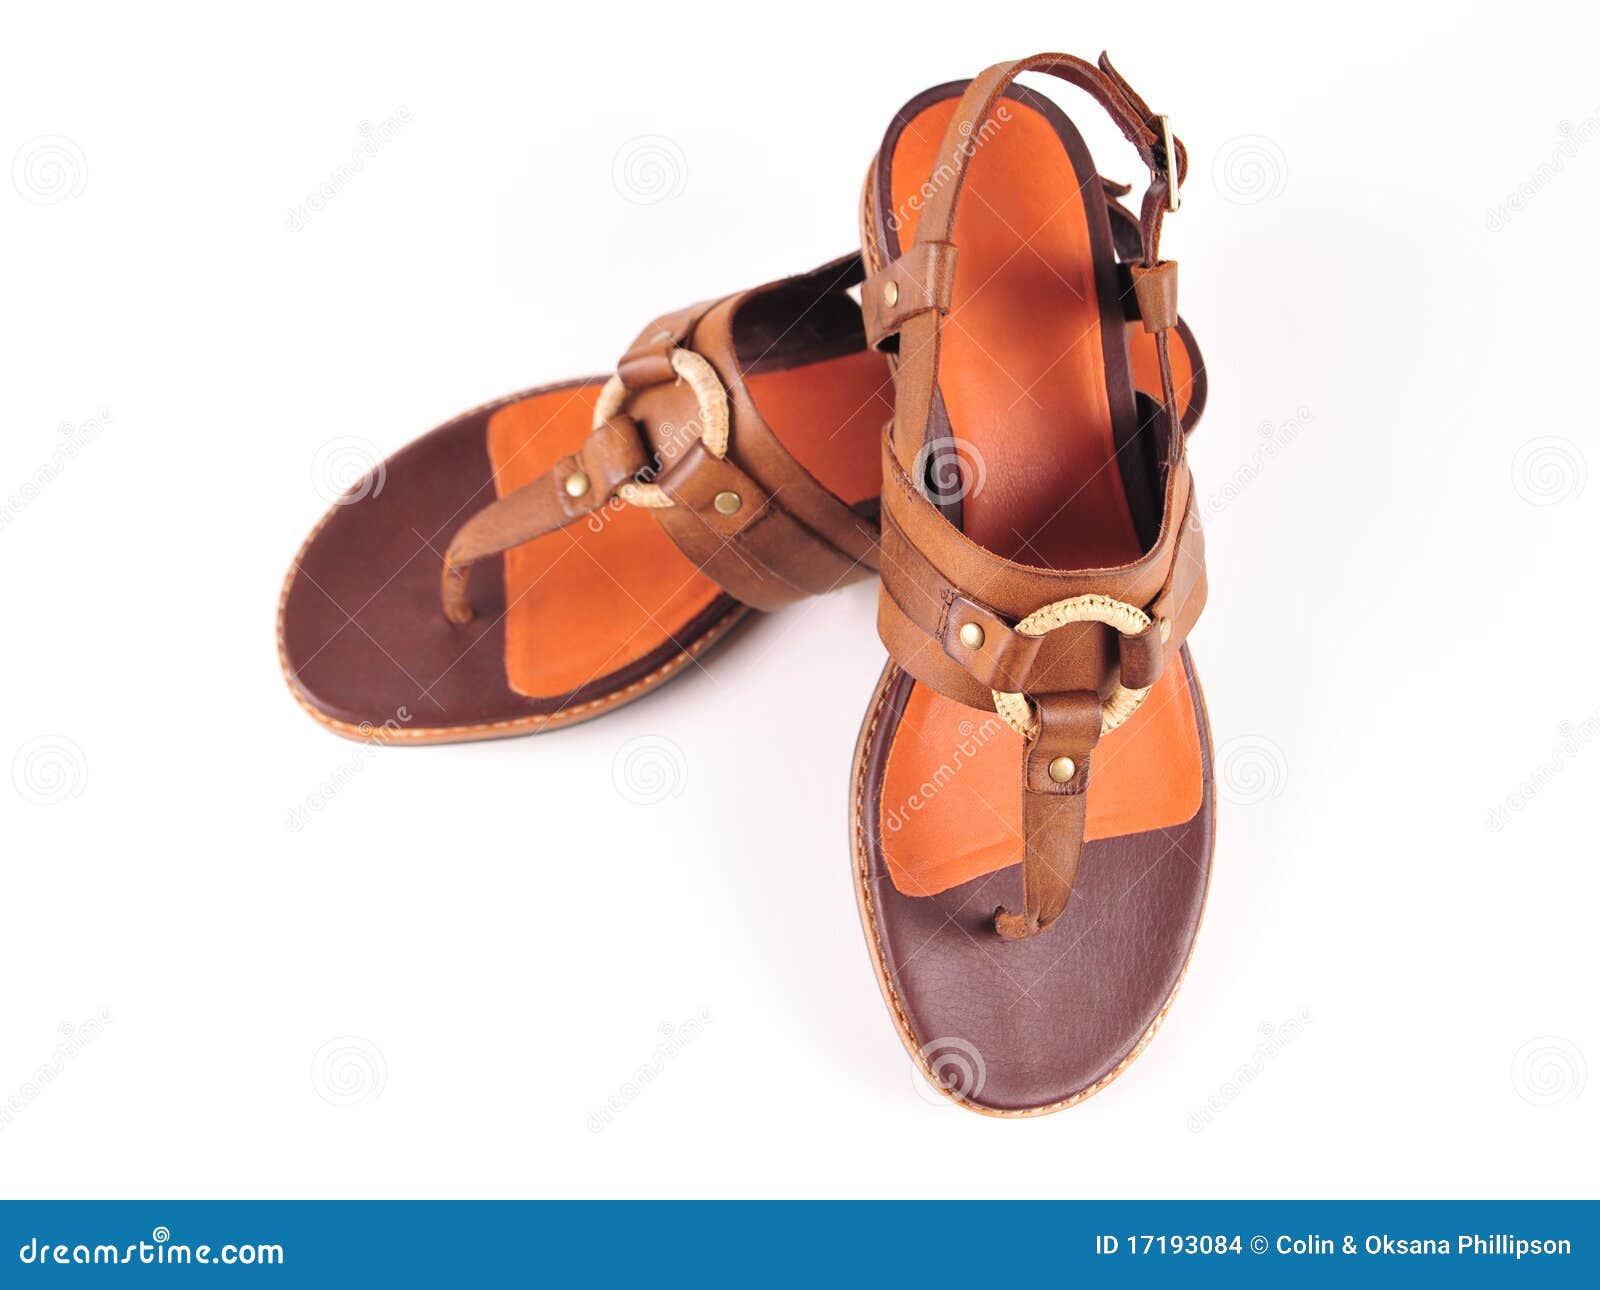 latest female sandals